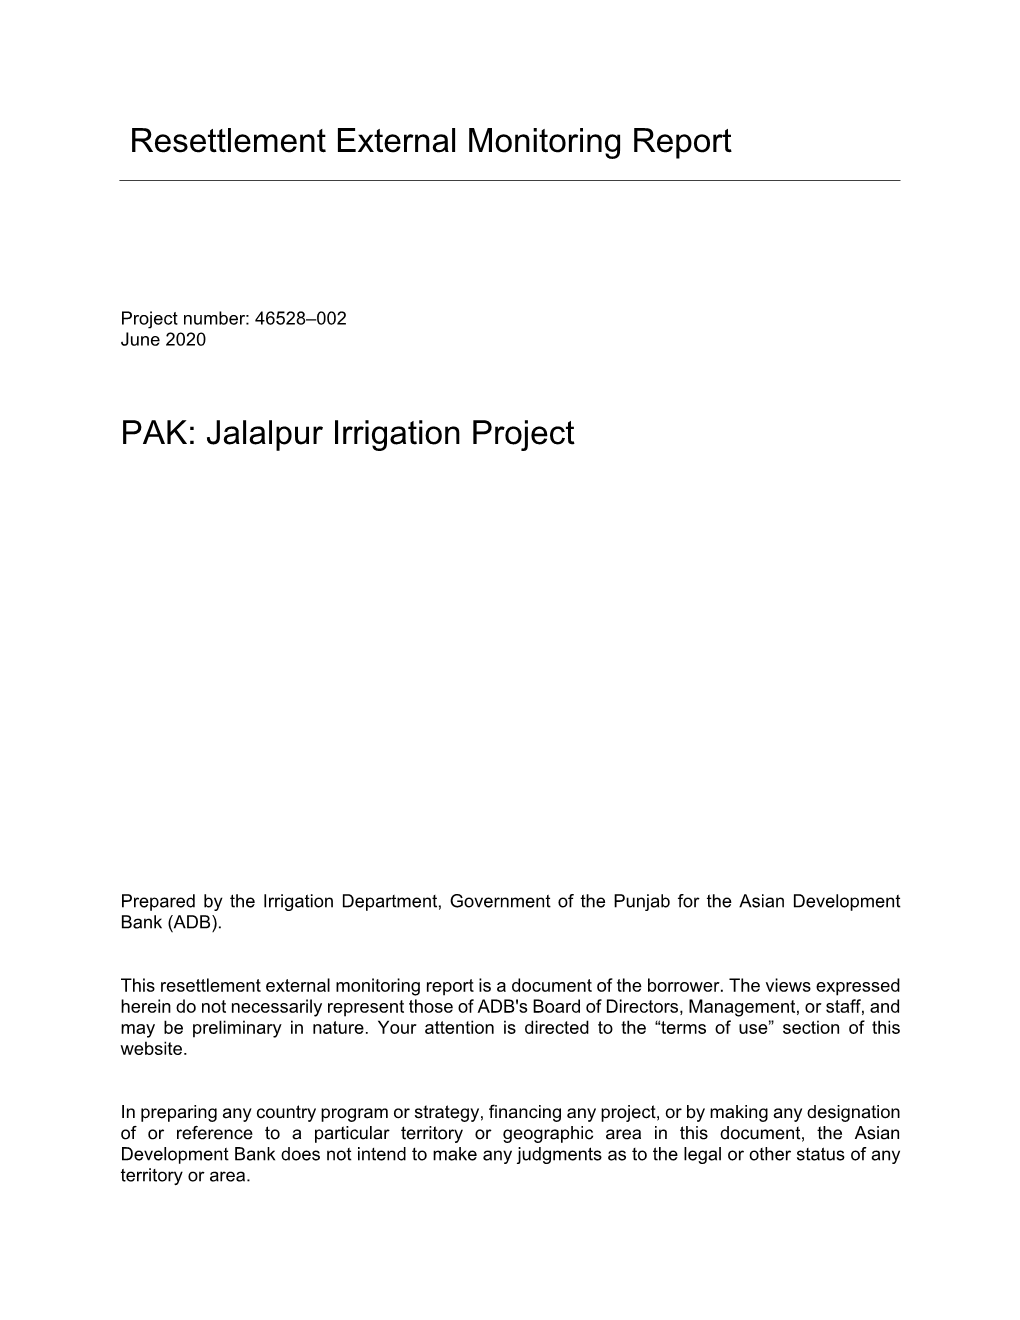 46528-002: Jalalpur Irrigation Project